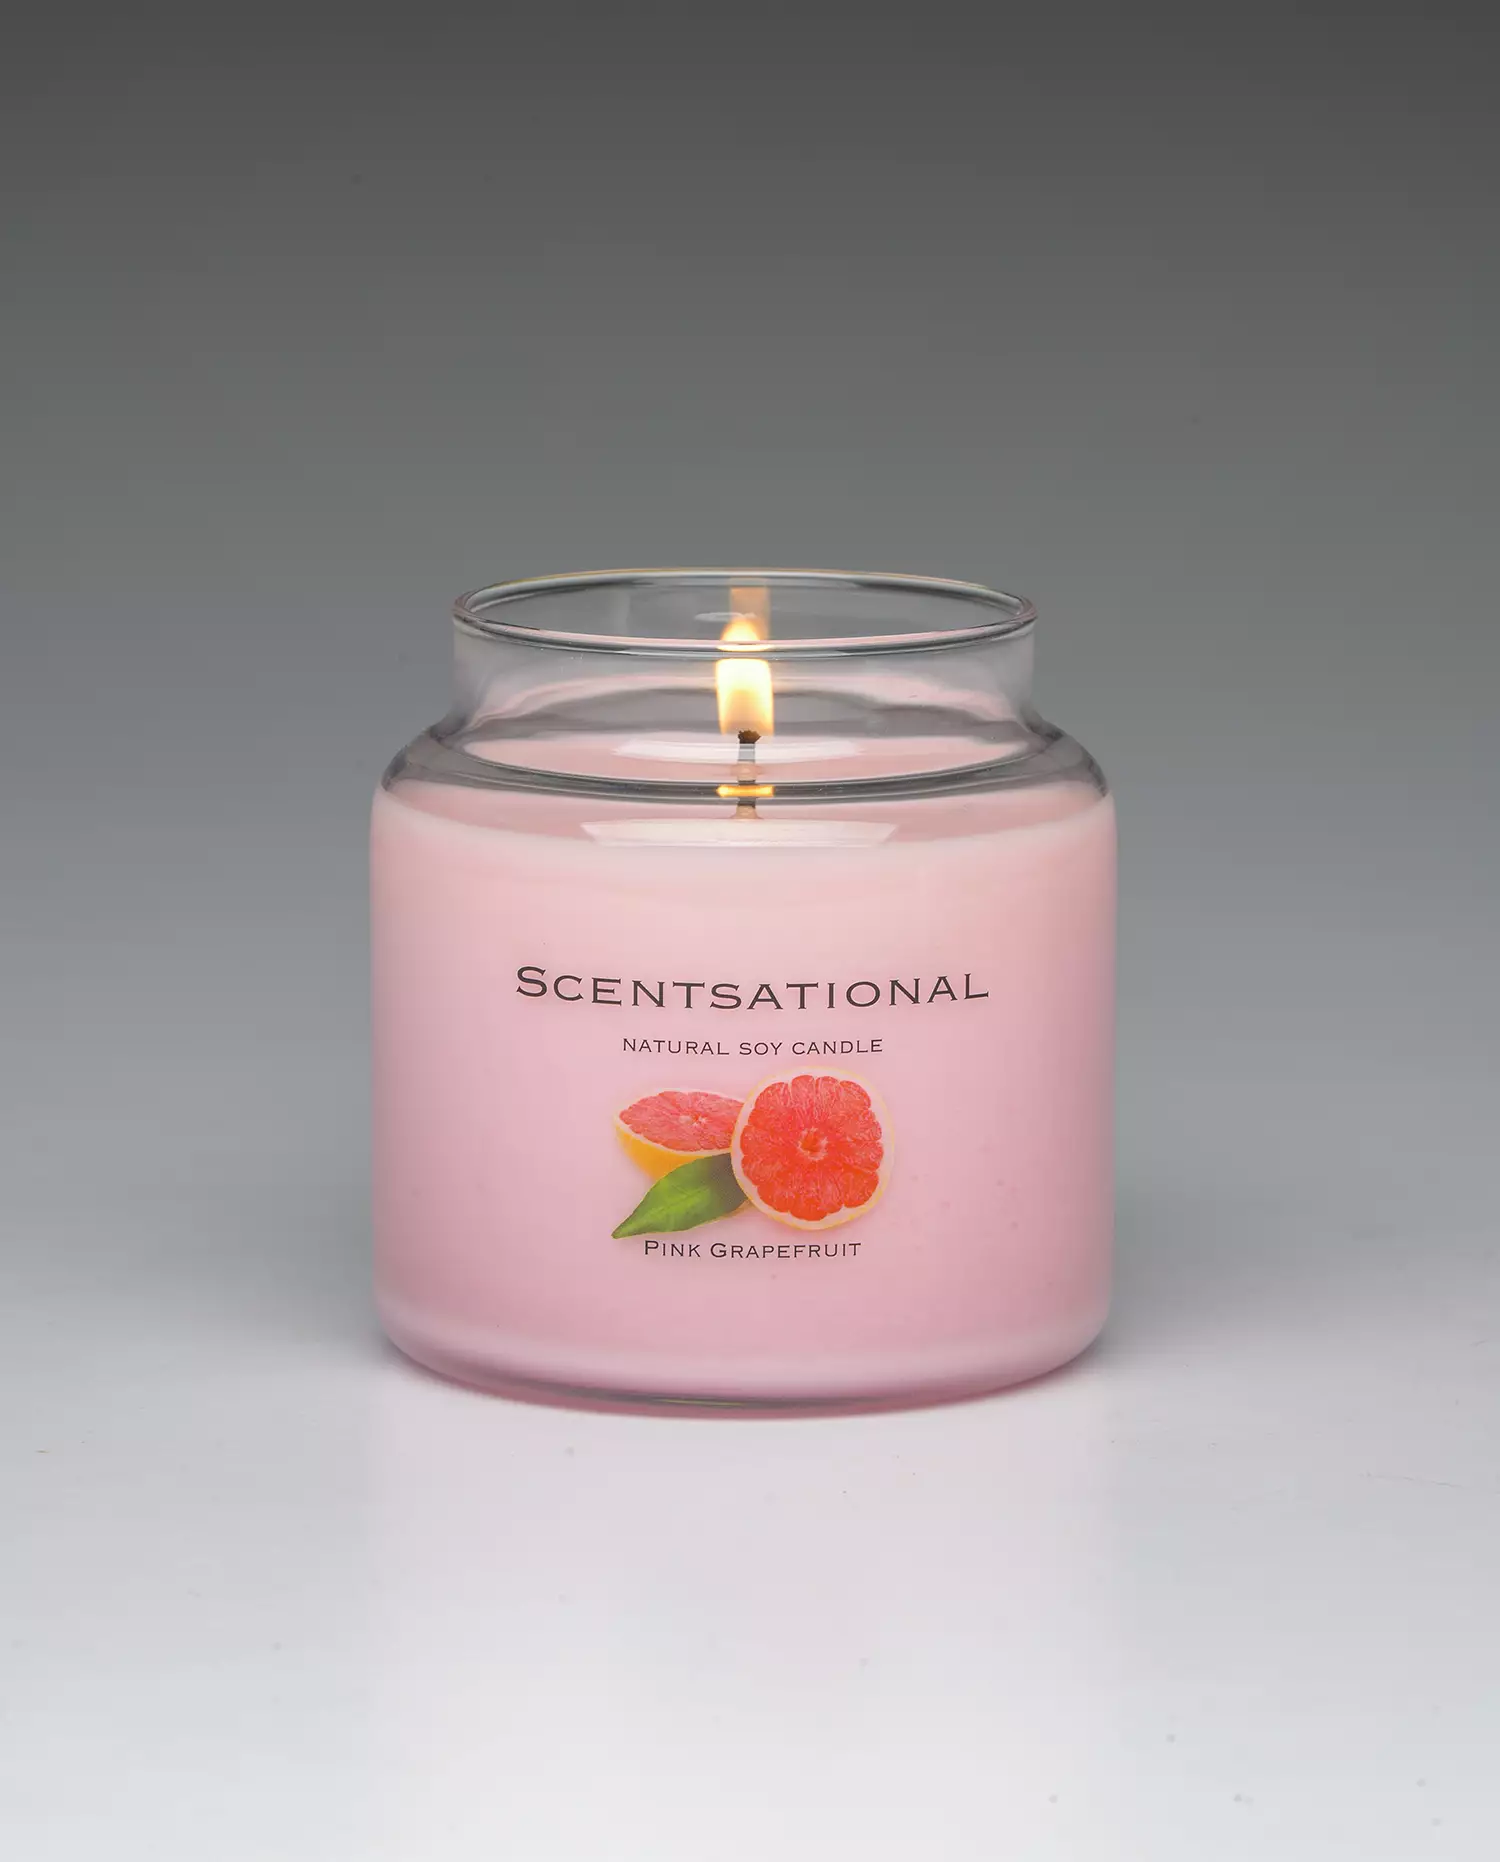 Pink Grapefruit 19oz scented candle burning